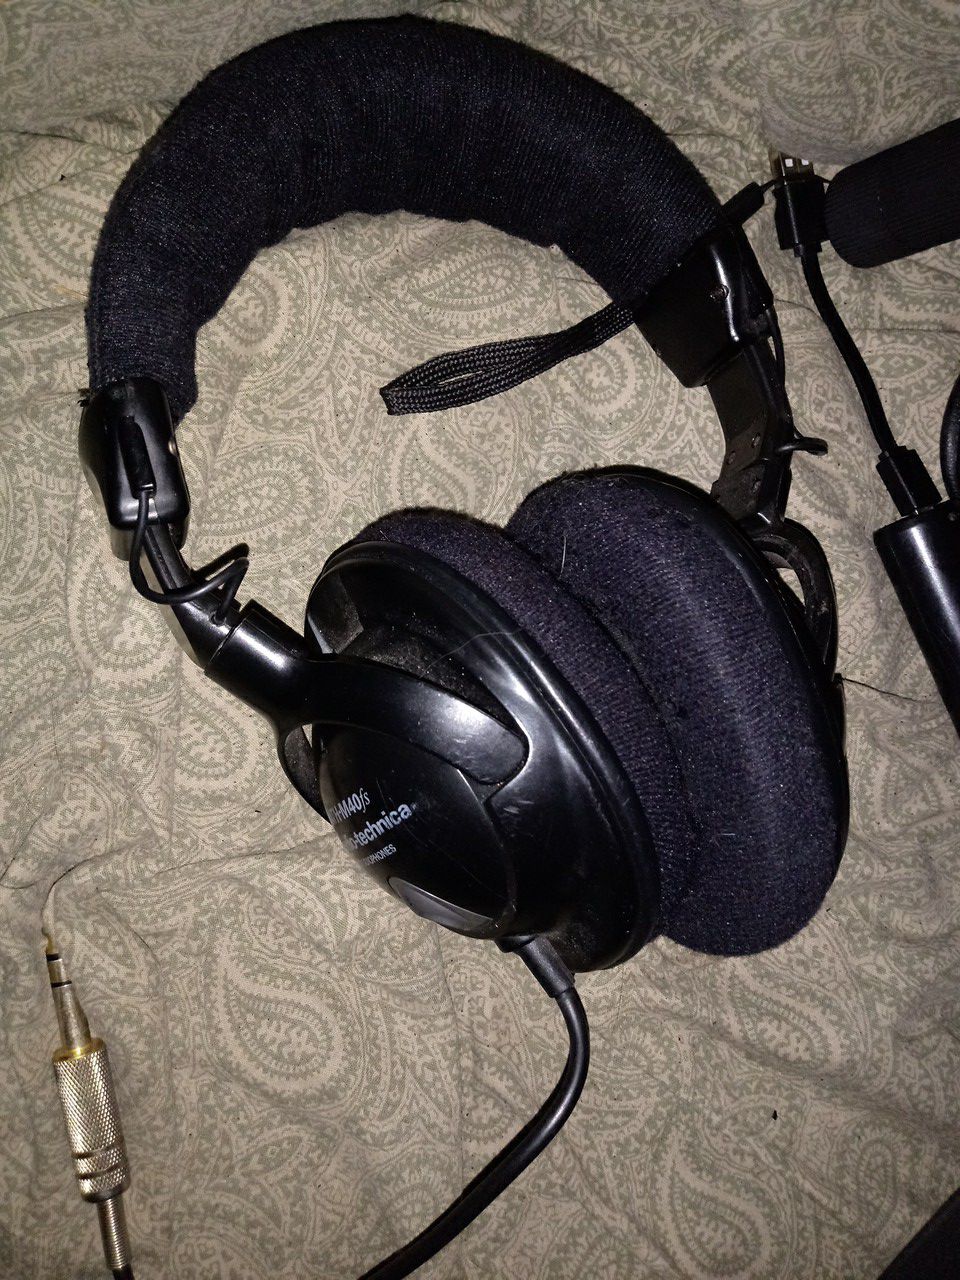 ATH-M40fs Pro Studio Headphones